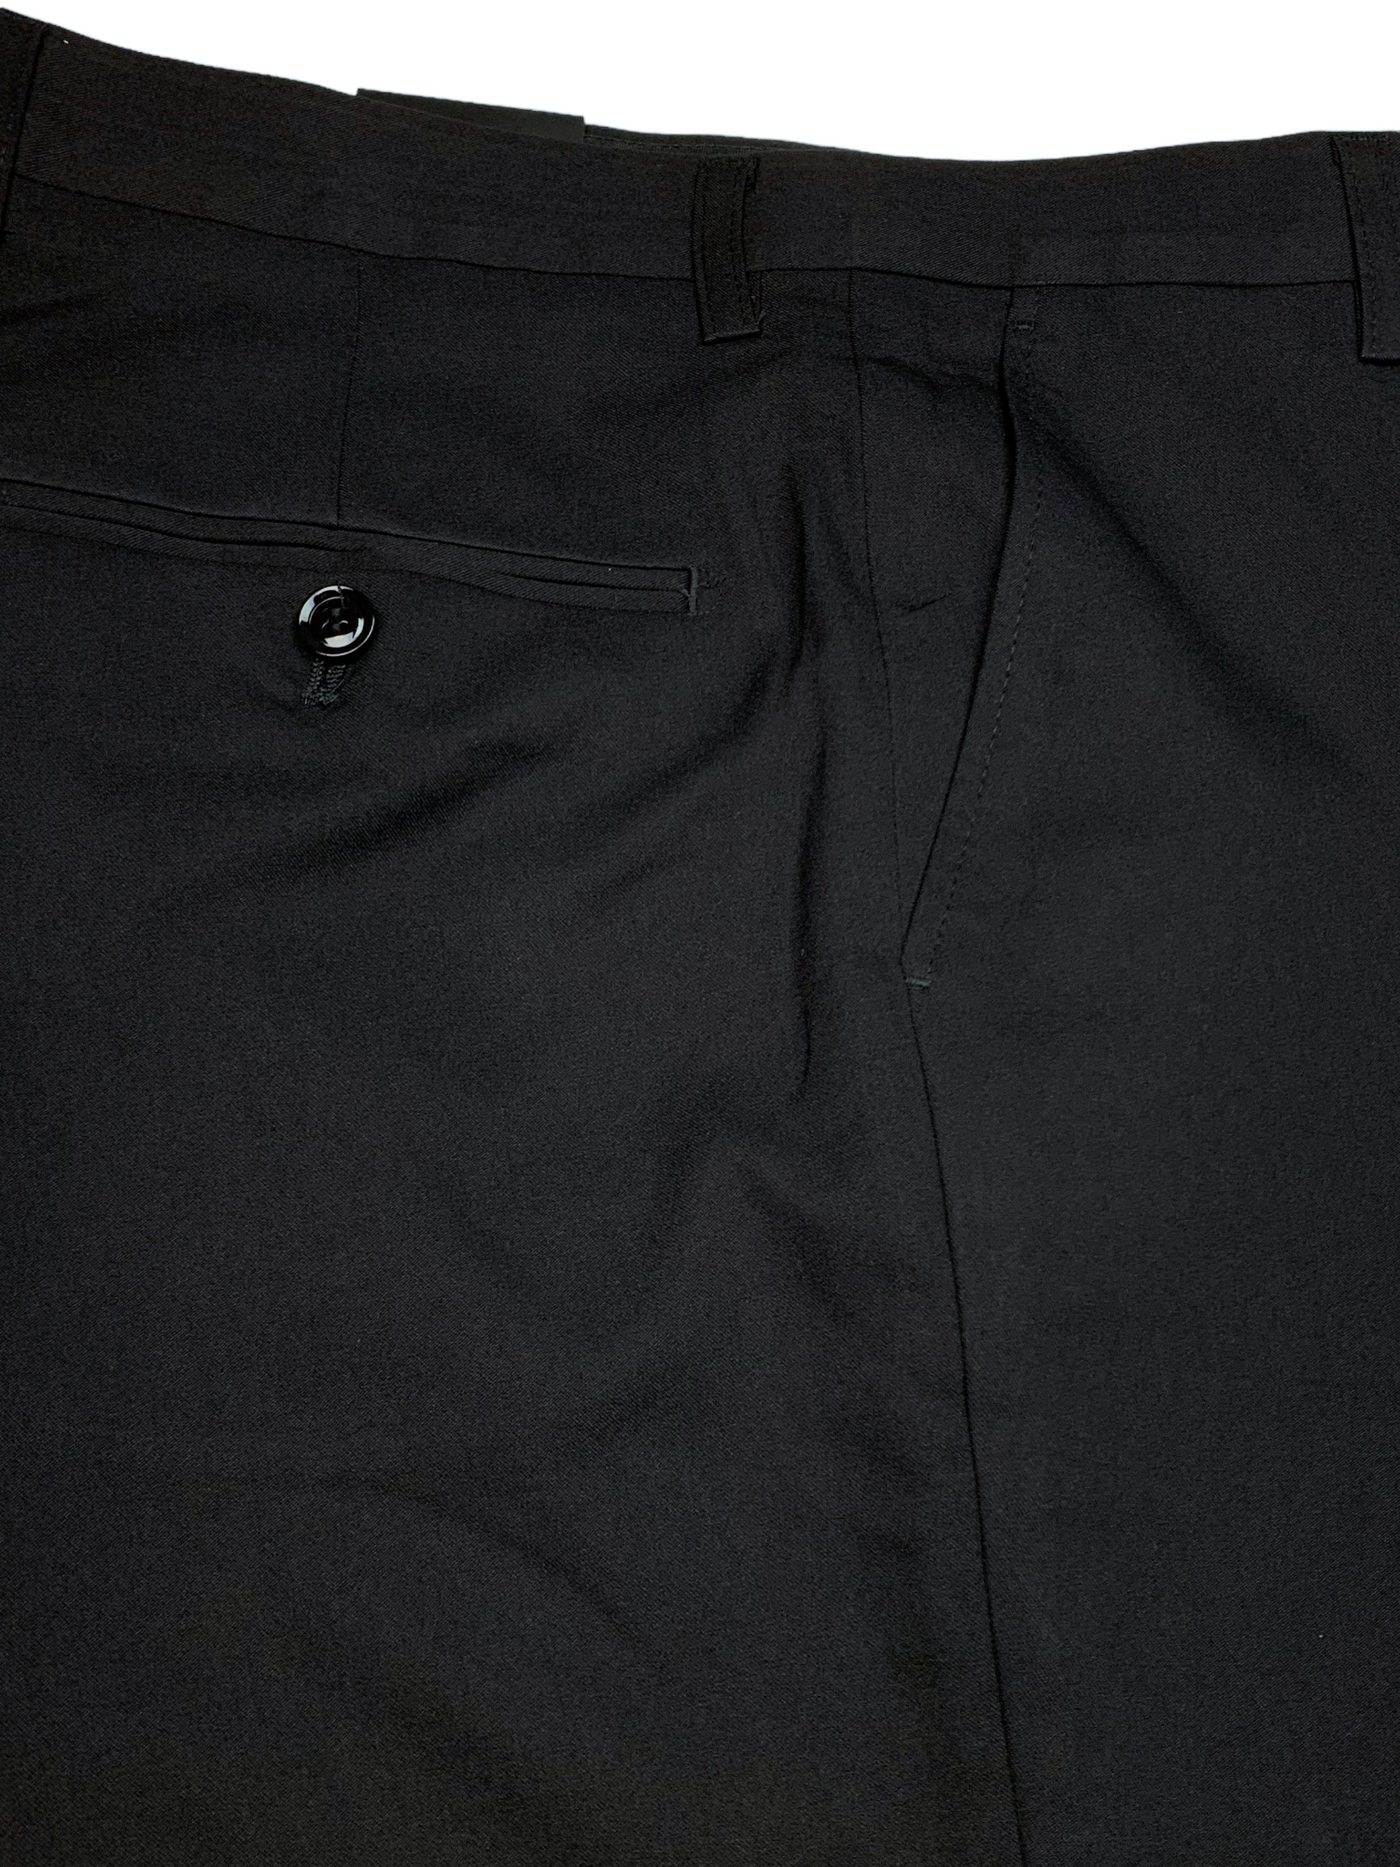 Pantalon habillé noir uni